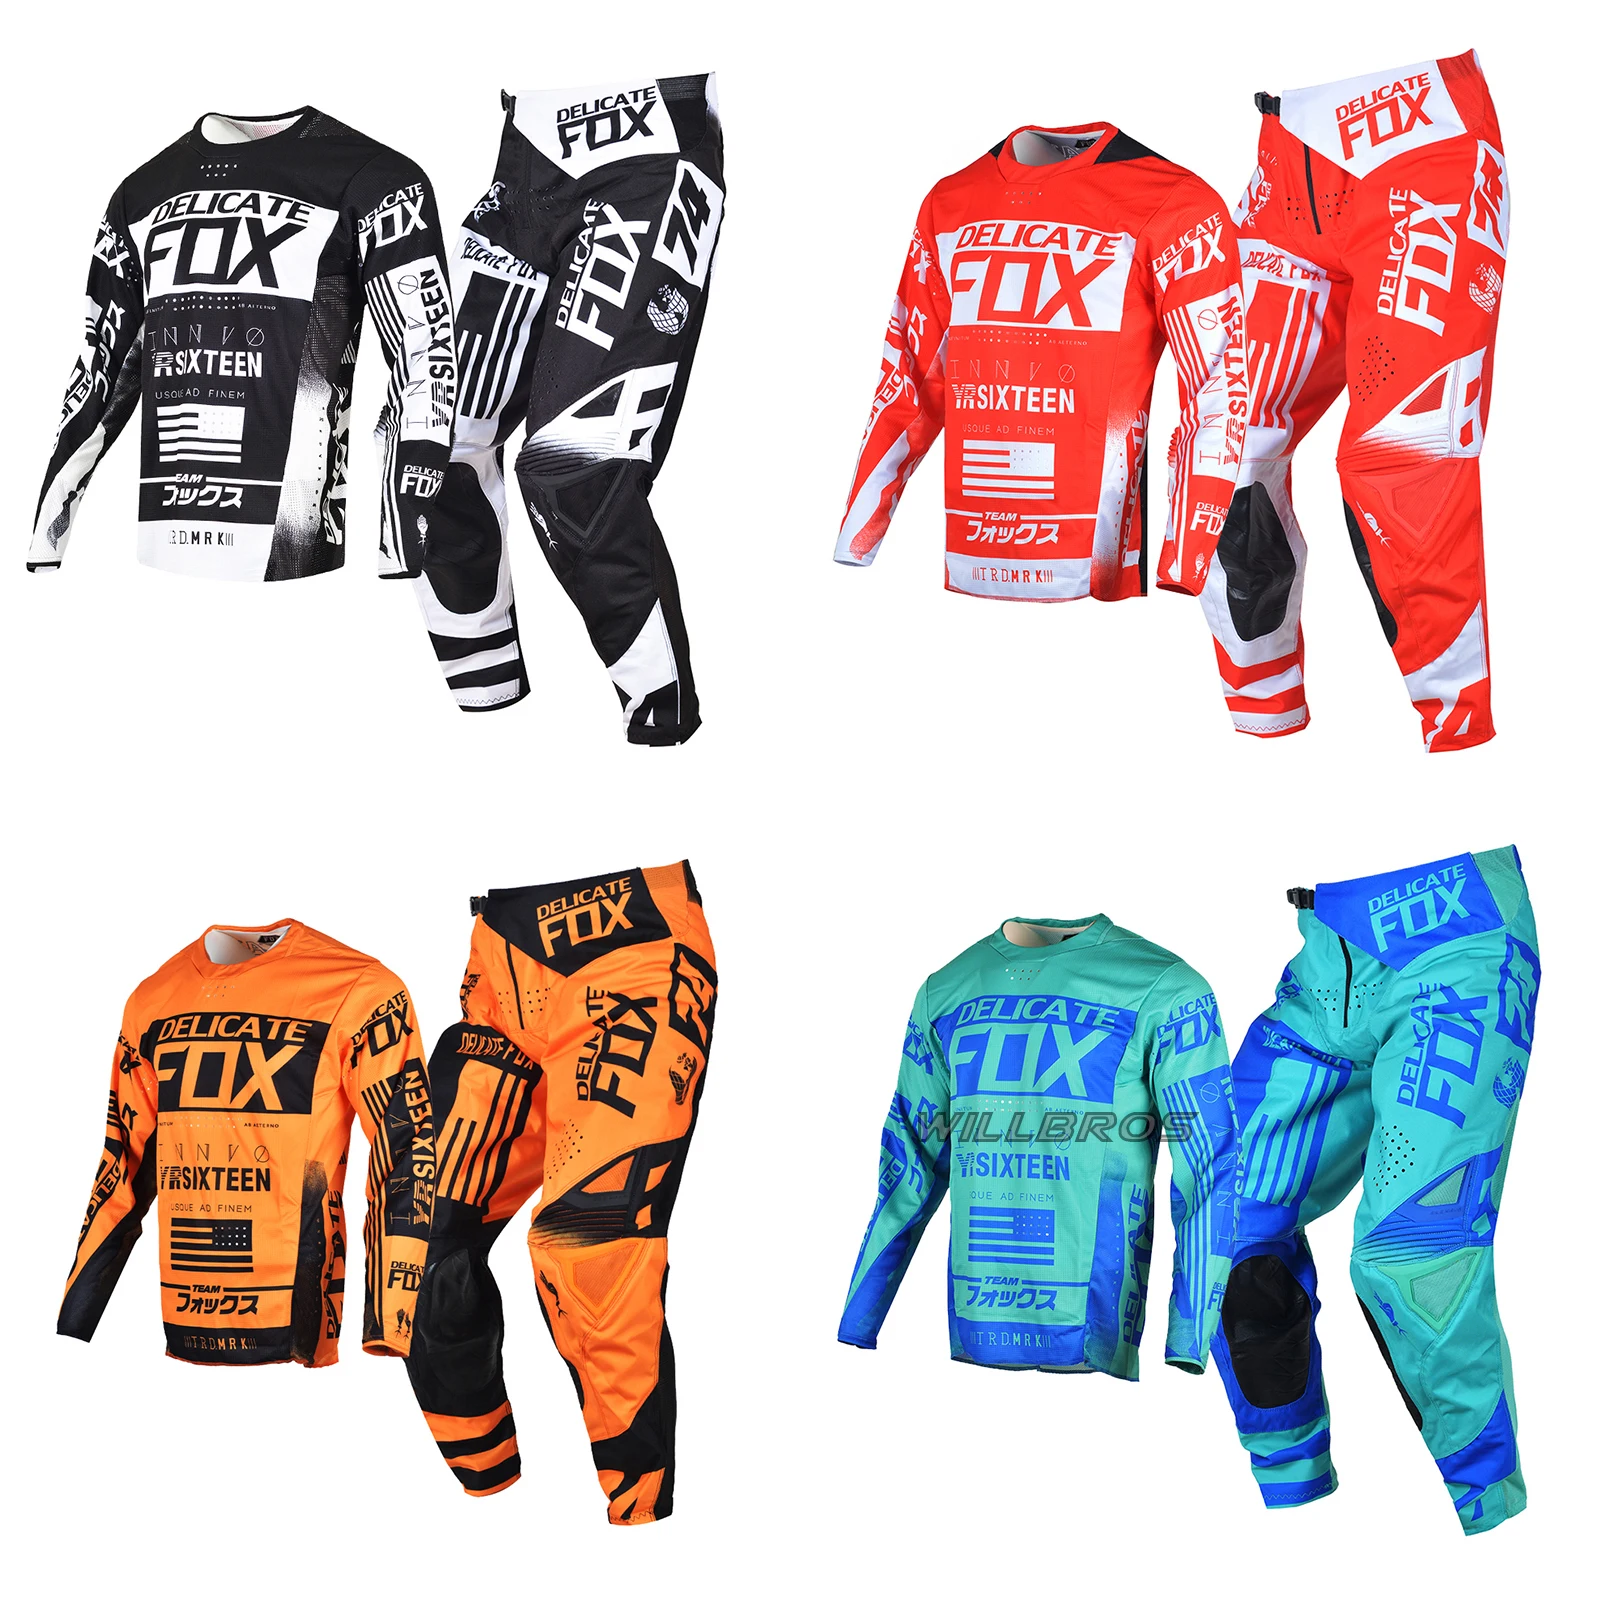 

Delicate Fox 360 Flight Jersey Pants Gear Set Motocross MX Combo Men Enduro Outfit BMX Race Suit Off-road ATV UTV Kits For Men